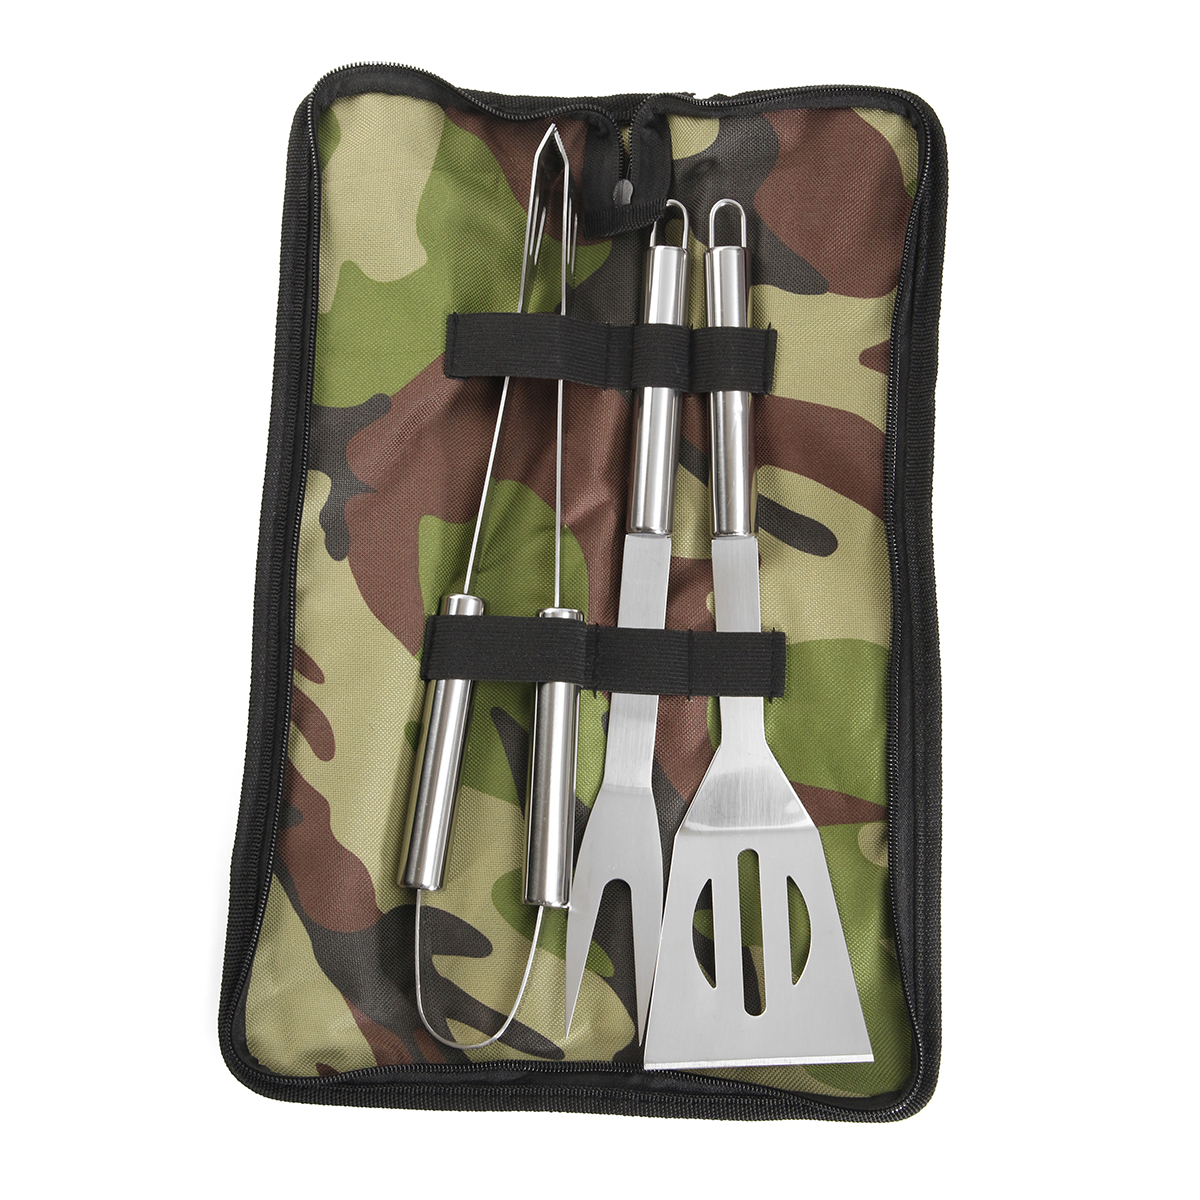 3Pcs-BBQ-Barbecue-Tableware-Stainless-Steel-Cooking-Fork-Gripper-Turner-Set-Portable-Bag-Utensil-1125768-2